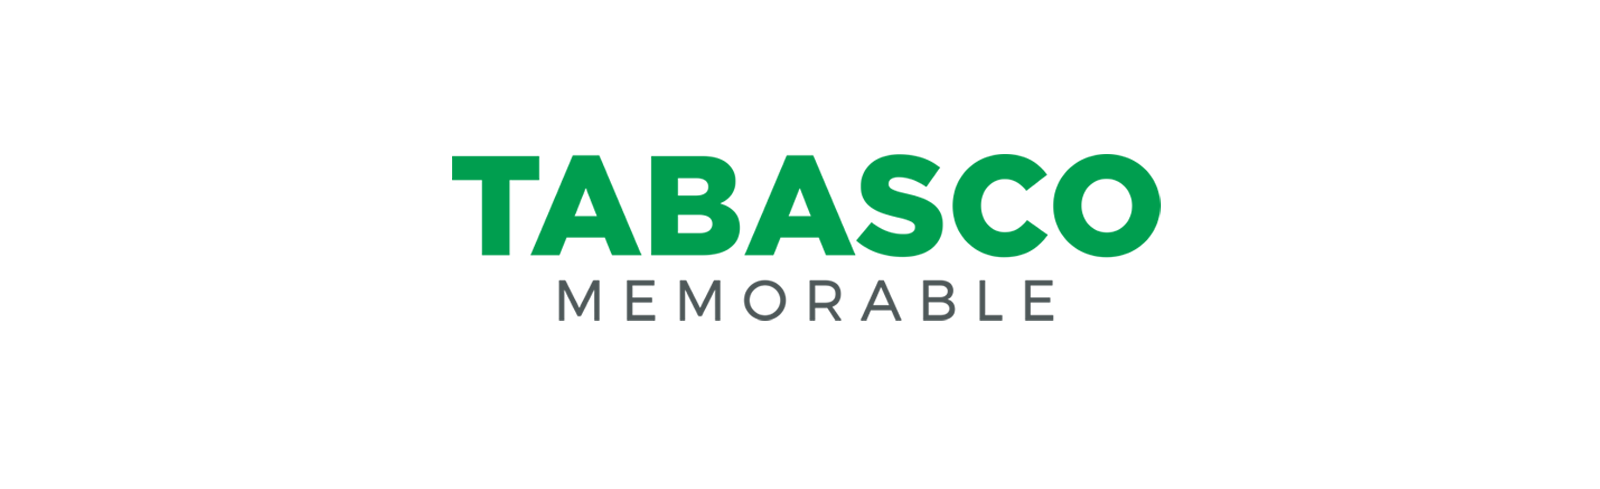 Tabasco_Webinar_ABC-Site_Header_Placeholder_1600x489